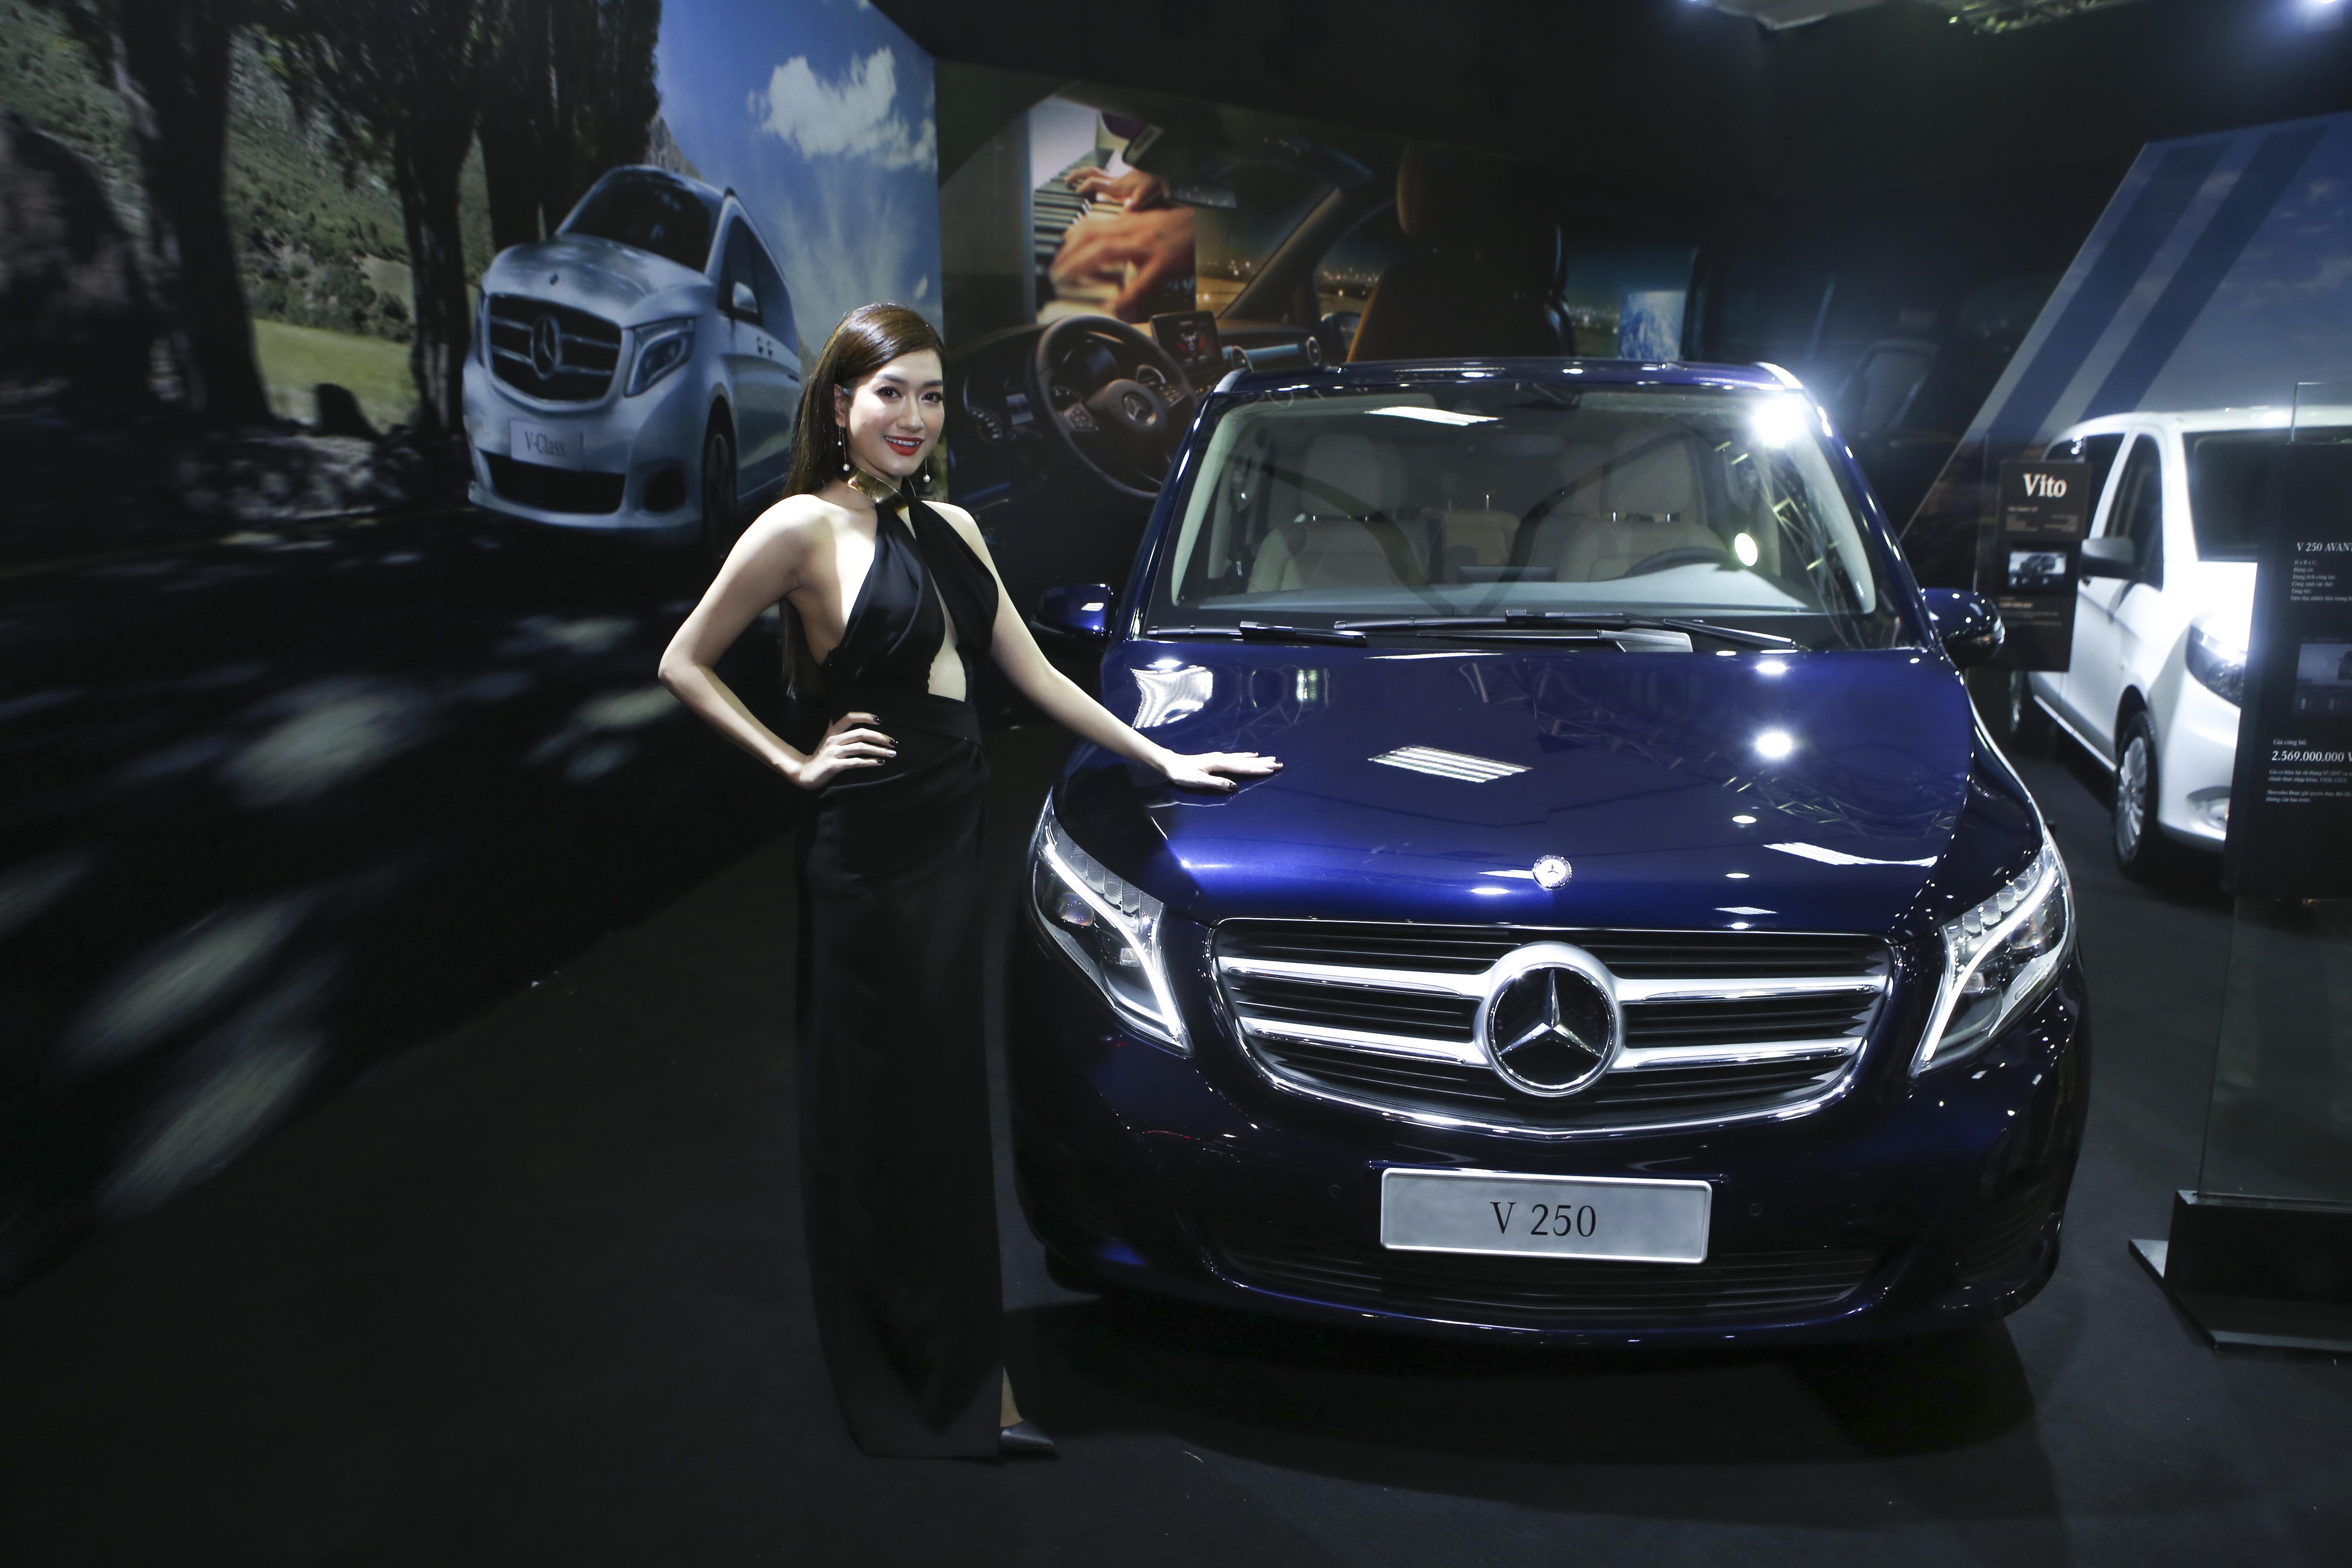 Mercedes-Benz Fascination 2017 invites visitors on a journey